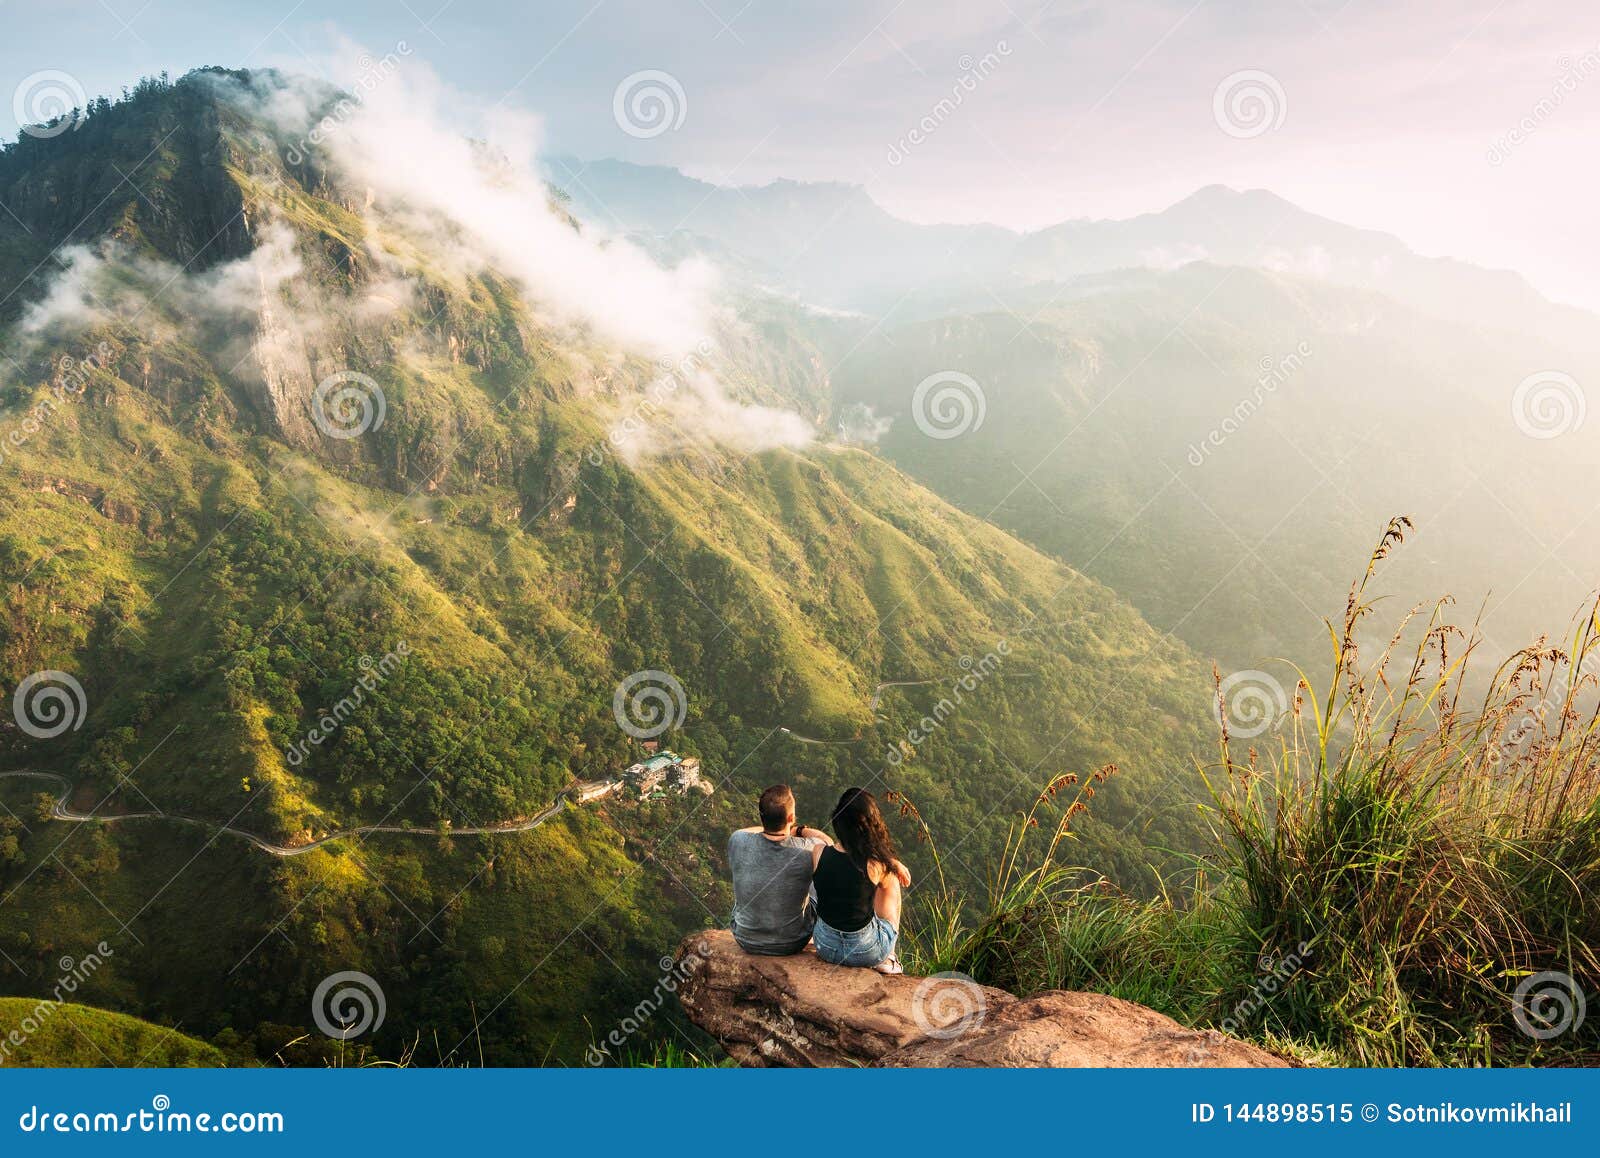 https://thumbs.dreamstime.com/z/couple-greets-sunrise-mountains-man-woman-wedding-travel-travels-around-asia-to-sri-lanka-serpentine-people-greet-dawn-144898515.jpg